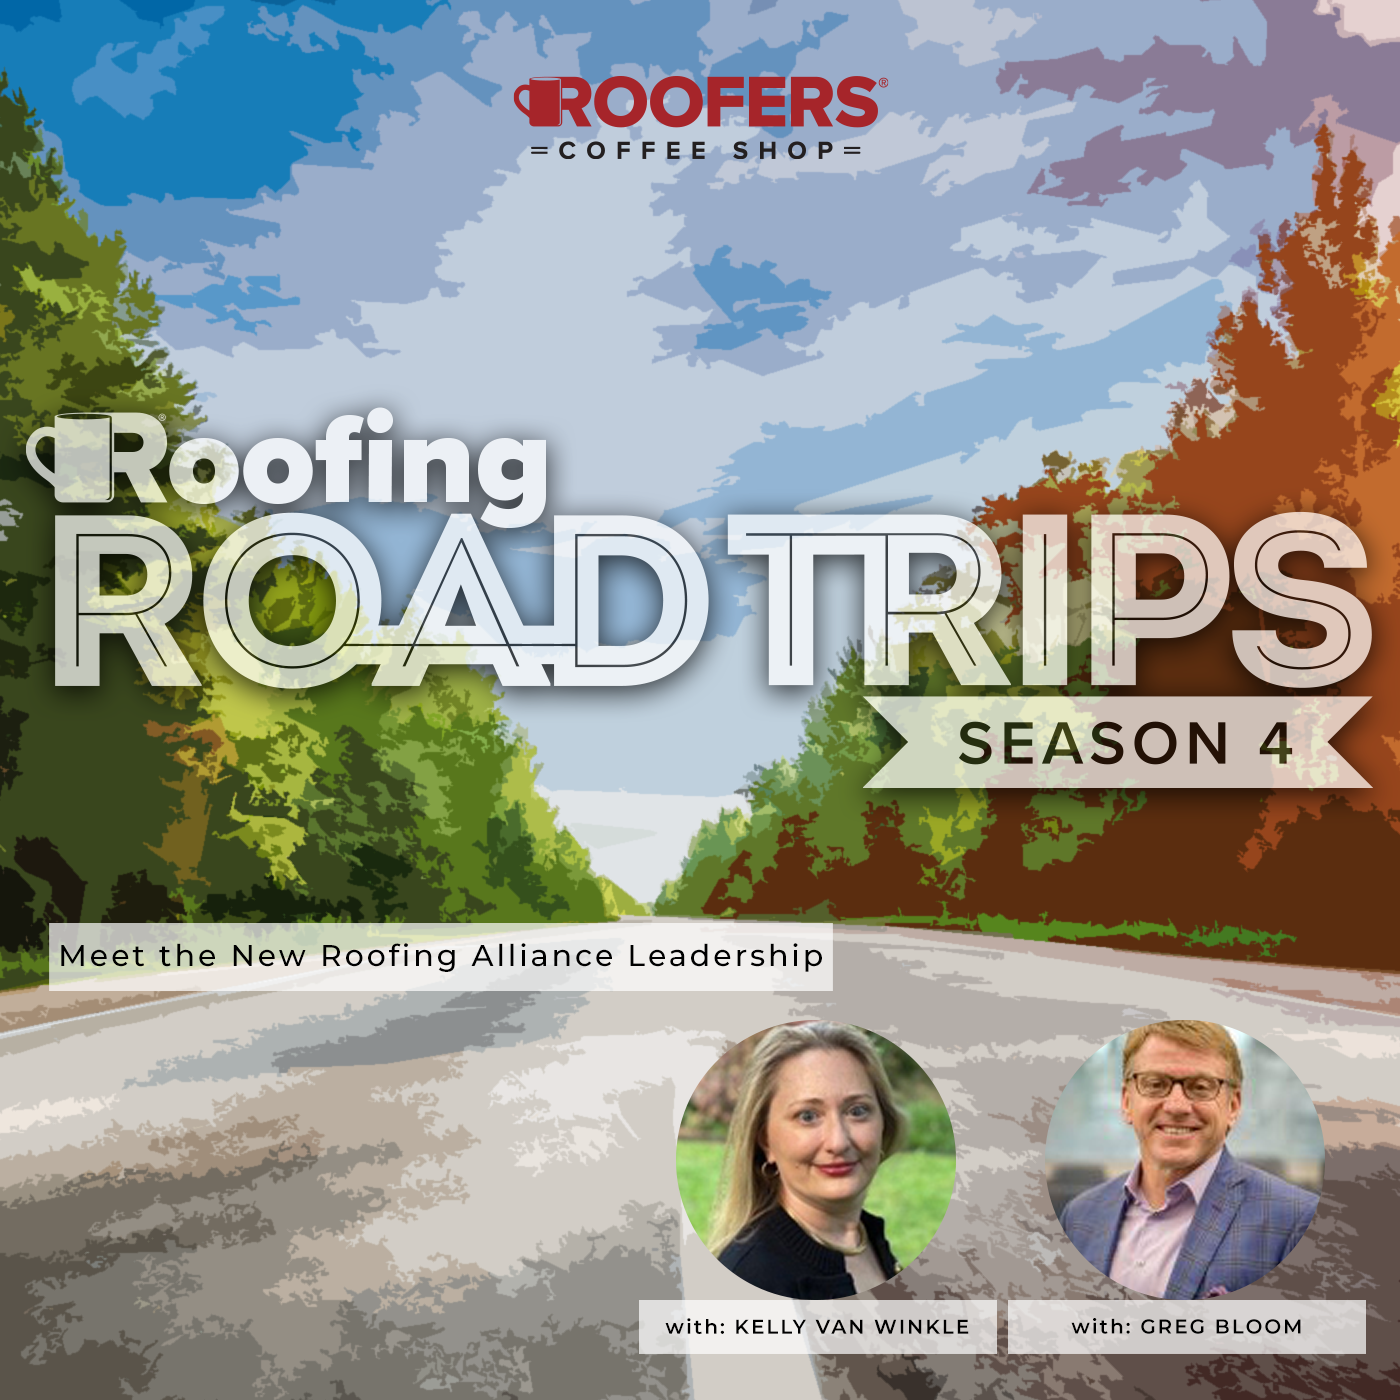 Roofing Alliance - Kelly Van Winkle & Greg Bloom - Meet the new Roofing Alliance Leadership - POD